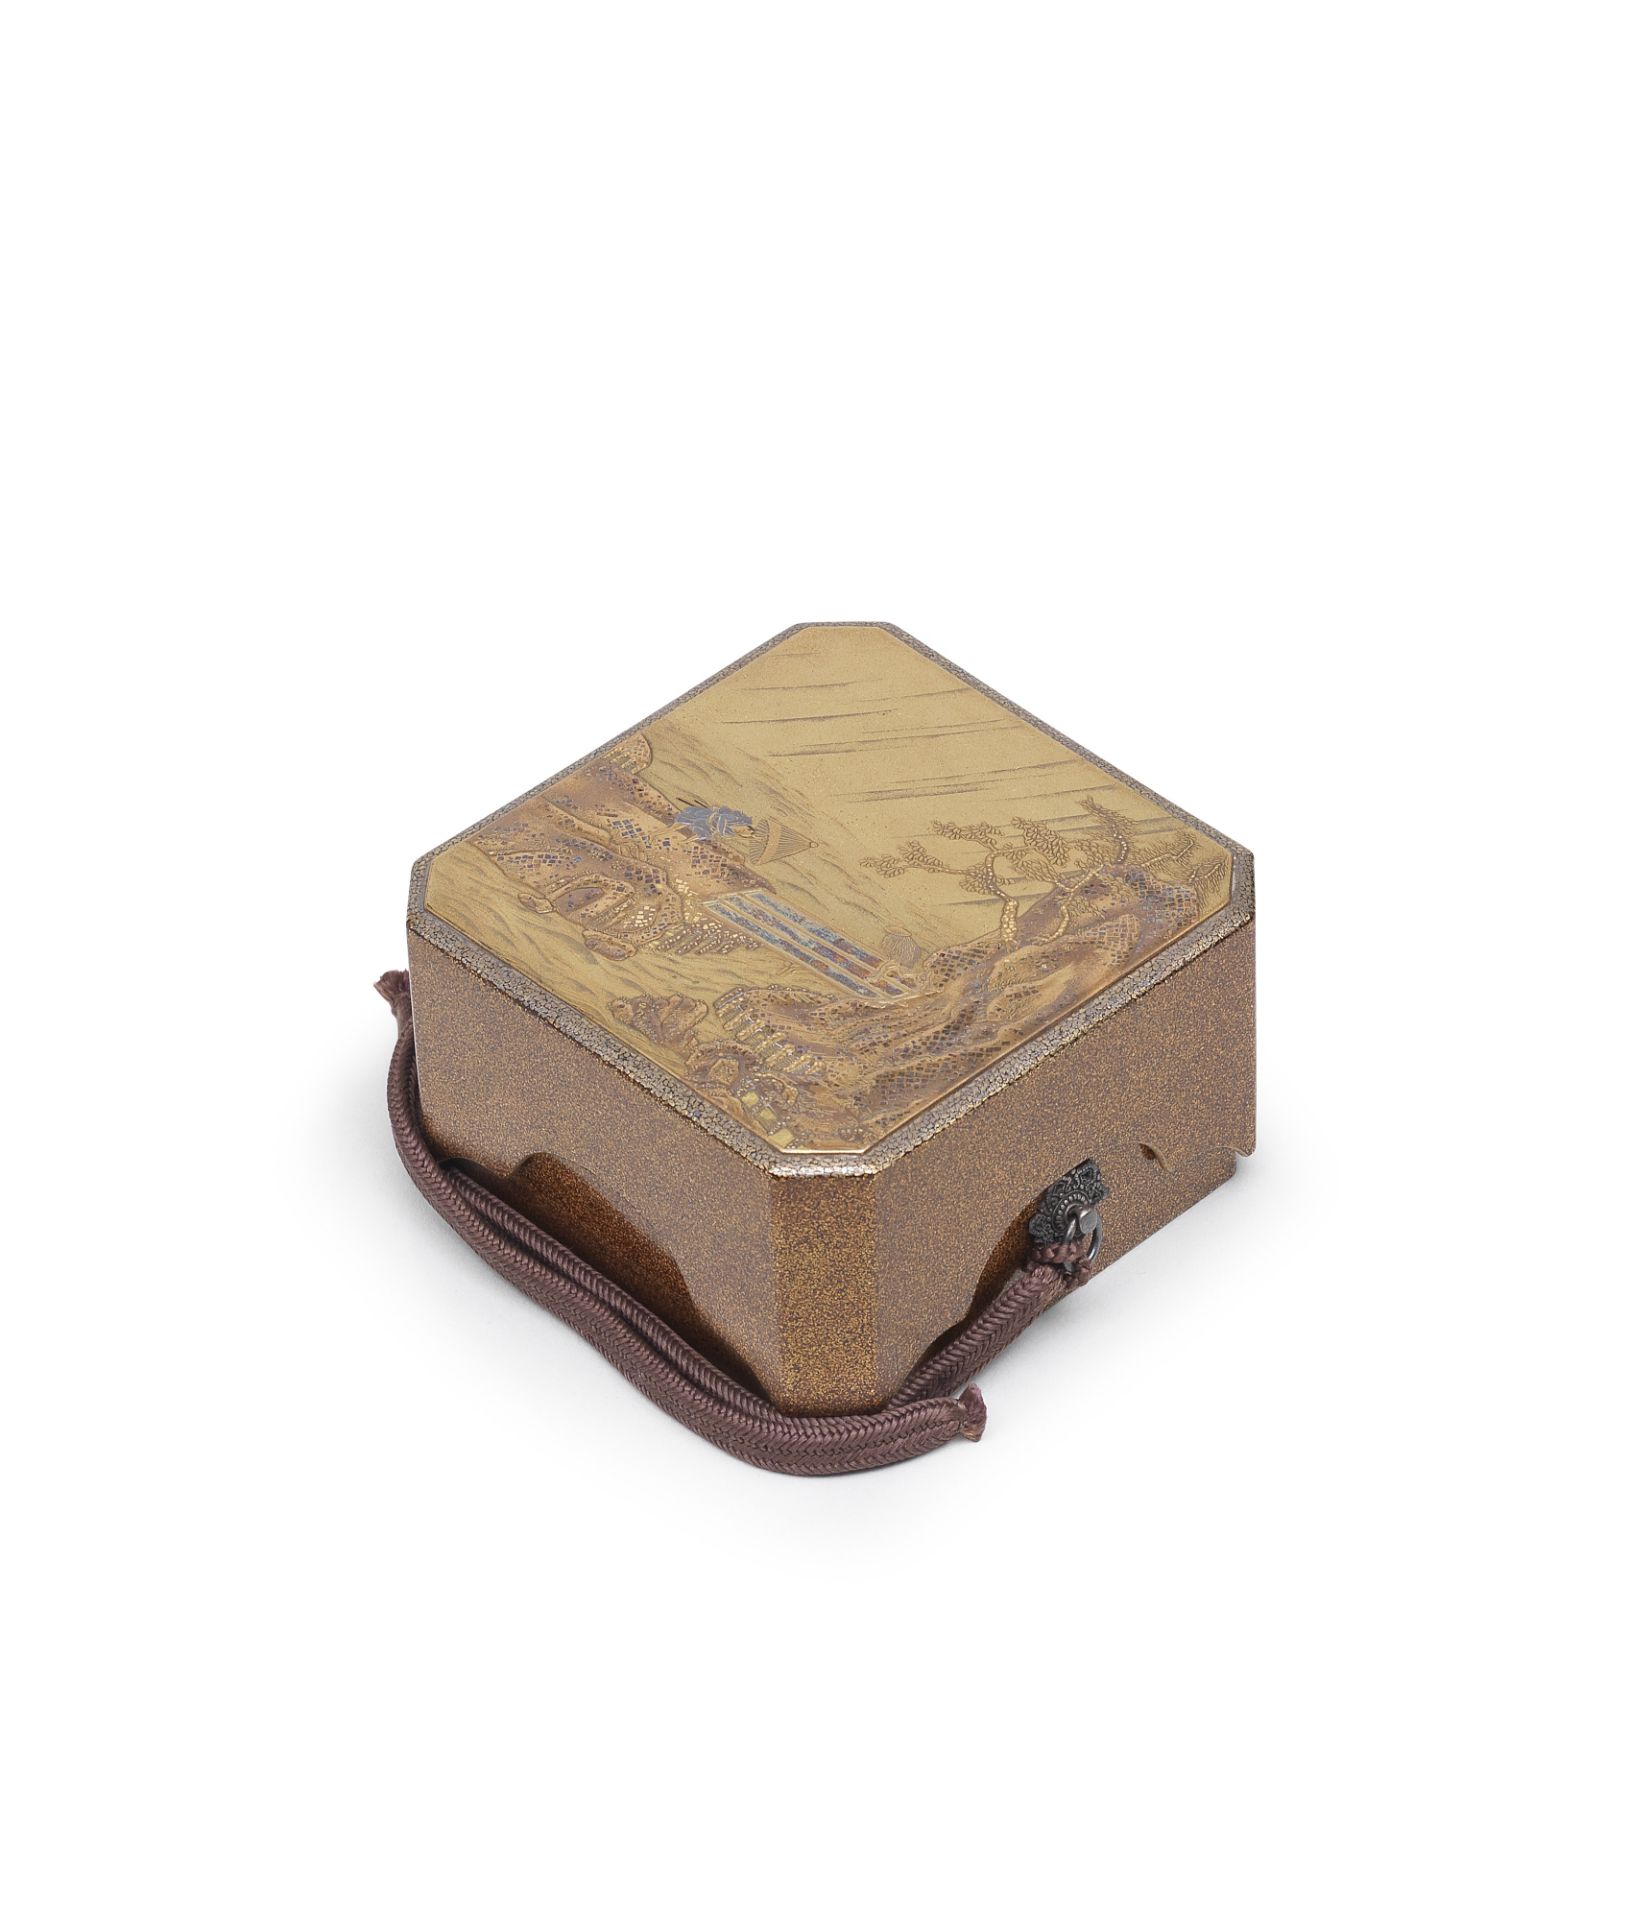 A GOLD-LACQUER SMALL ANGLED SQUARE KOGO (BOX FOR INCENSE WOOD) Edo period (1615-1868) or Meiji e...